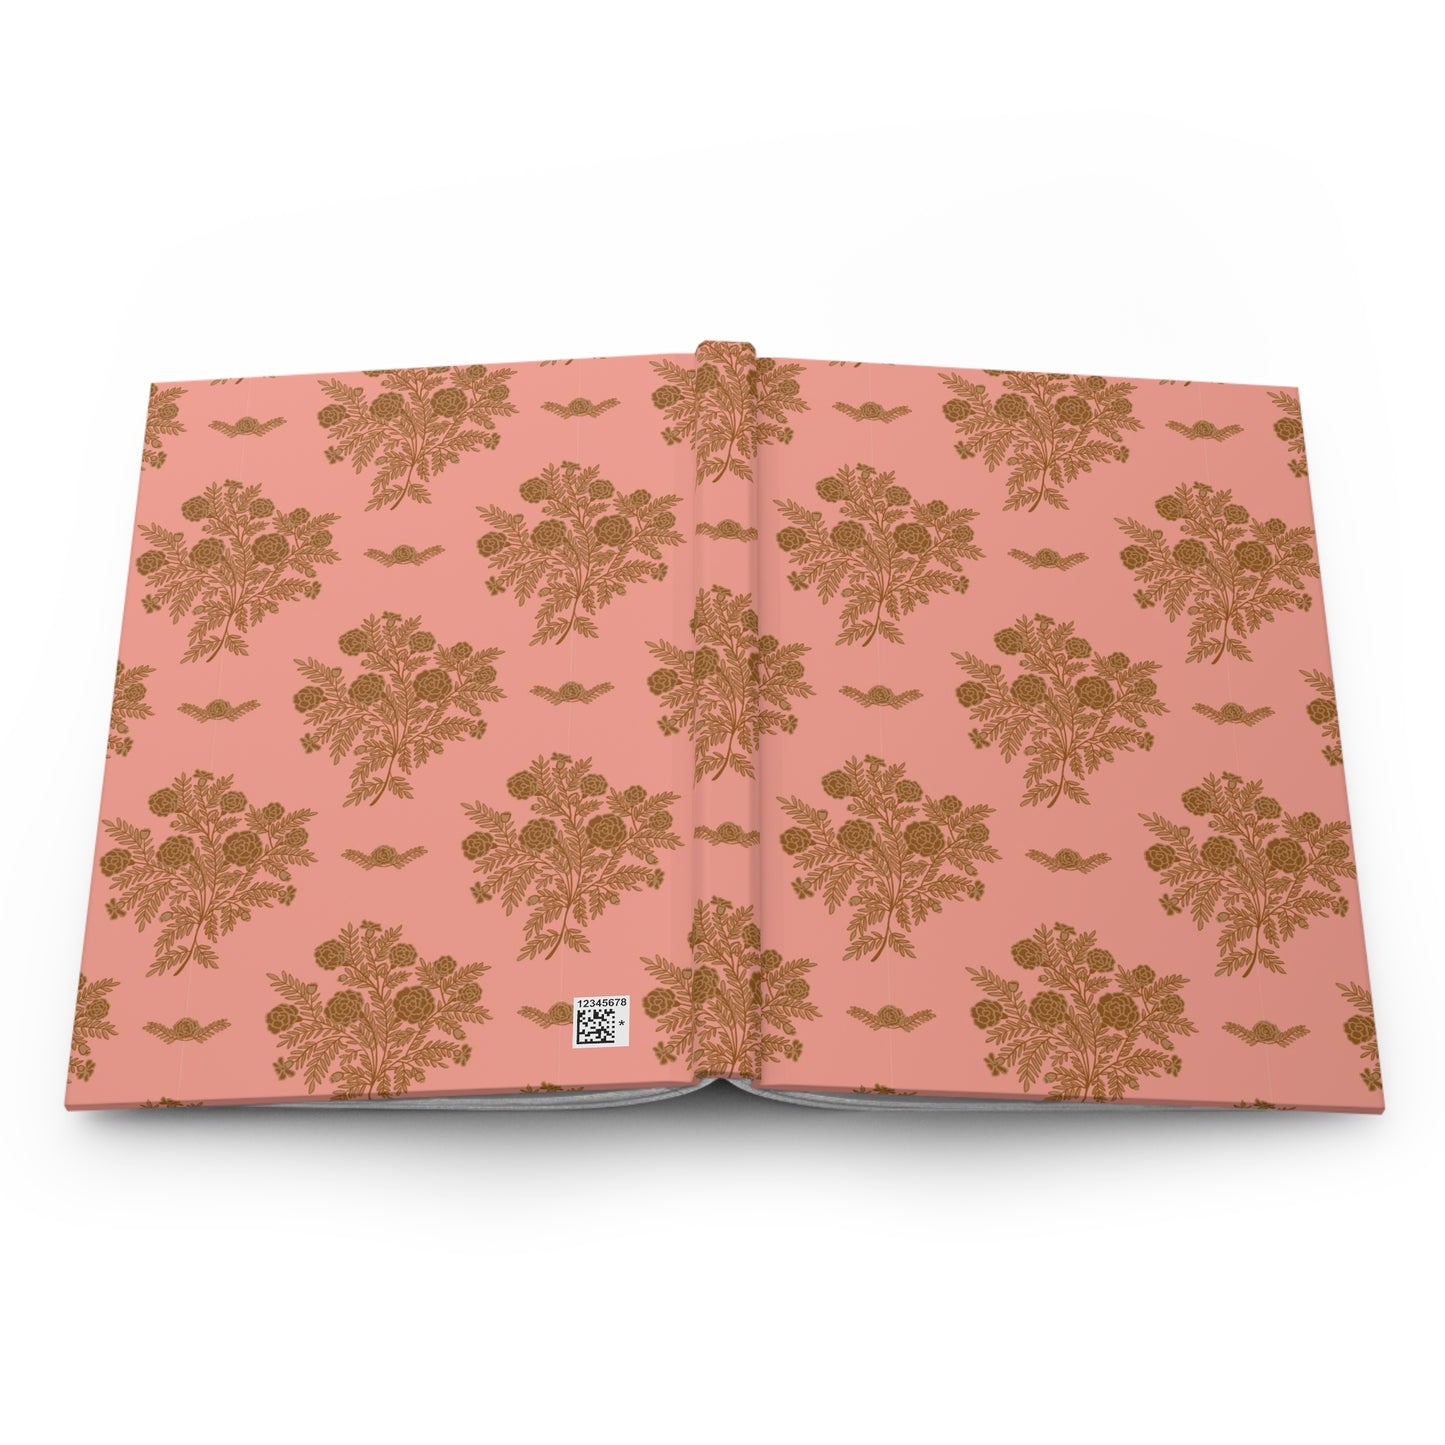 Sepia Marigolds Hardcover Journal Matte